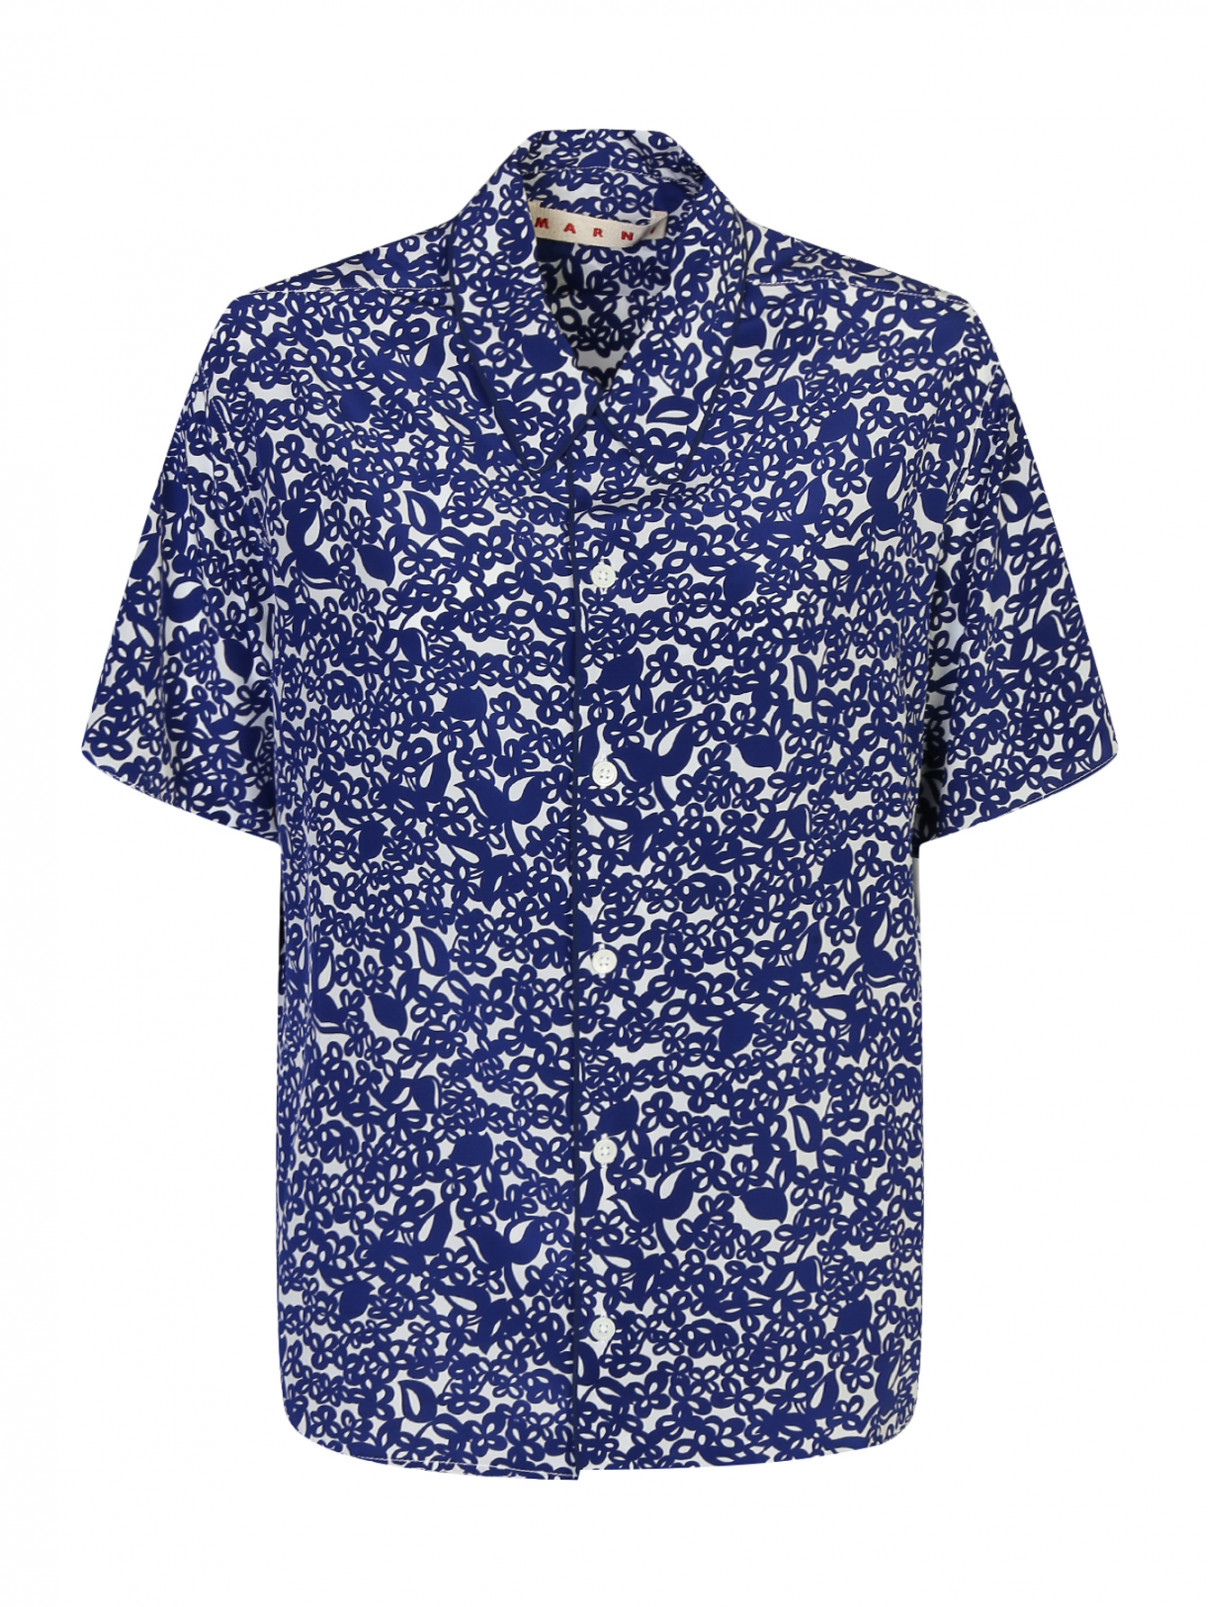 Блуза из шелка с узором и короткими рукавами Marni  –  Общий вид  – Цвет:  Синий